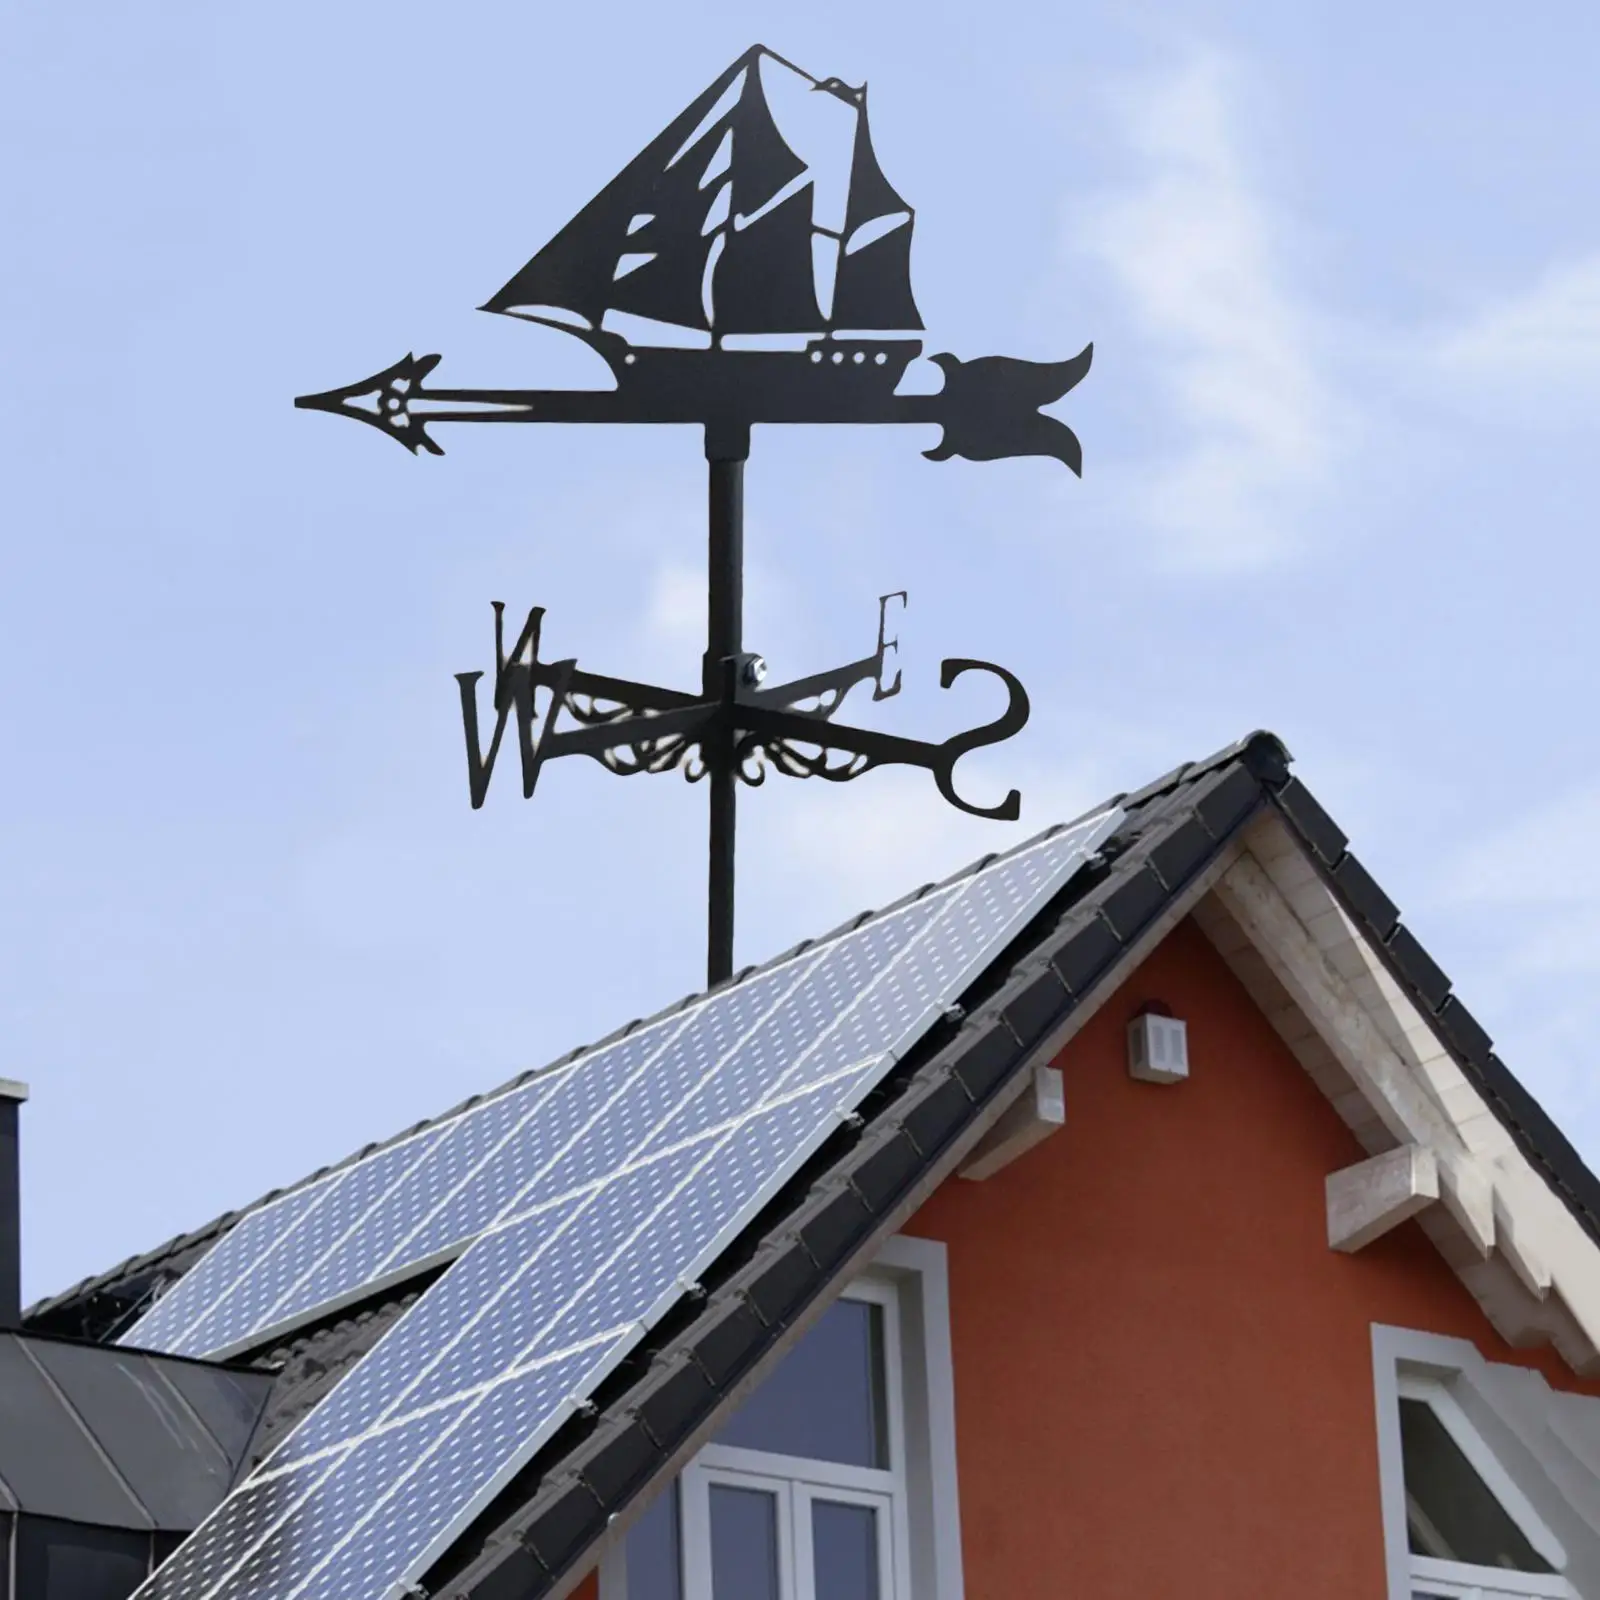 Iron Sailboat Wind Vane Shed Mount Weather Vane Wind Direction Indicator Outdoor Garden Ornament